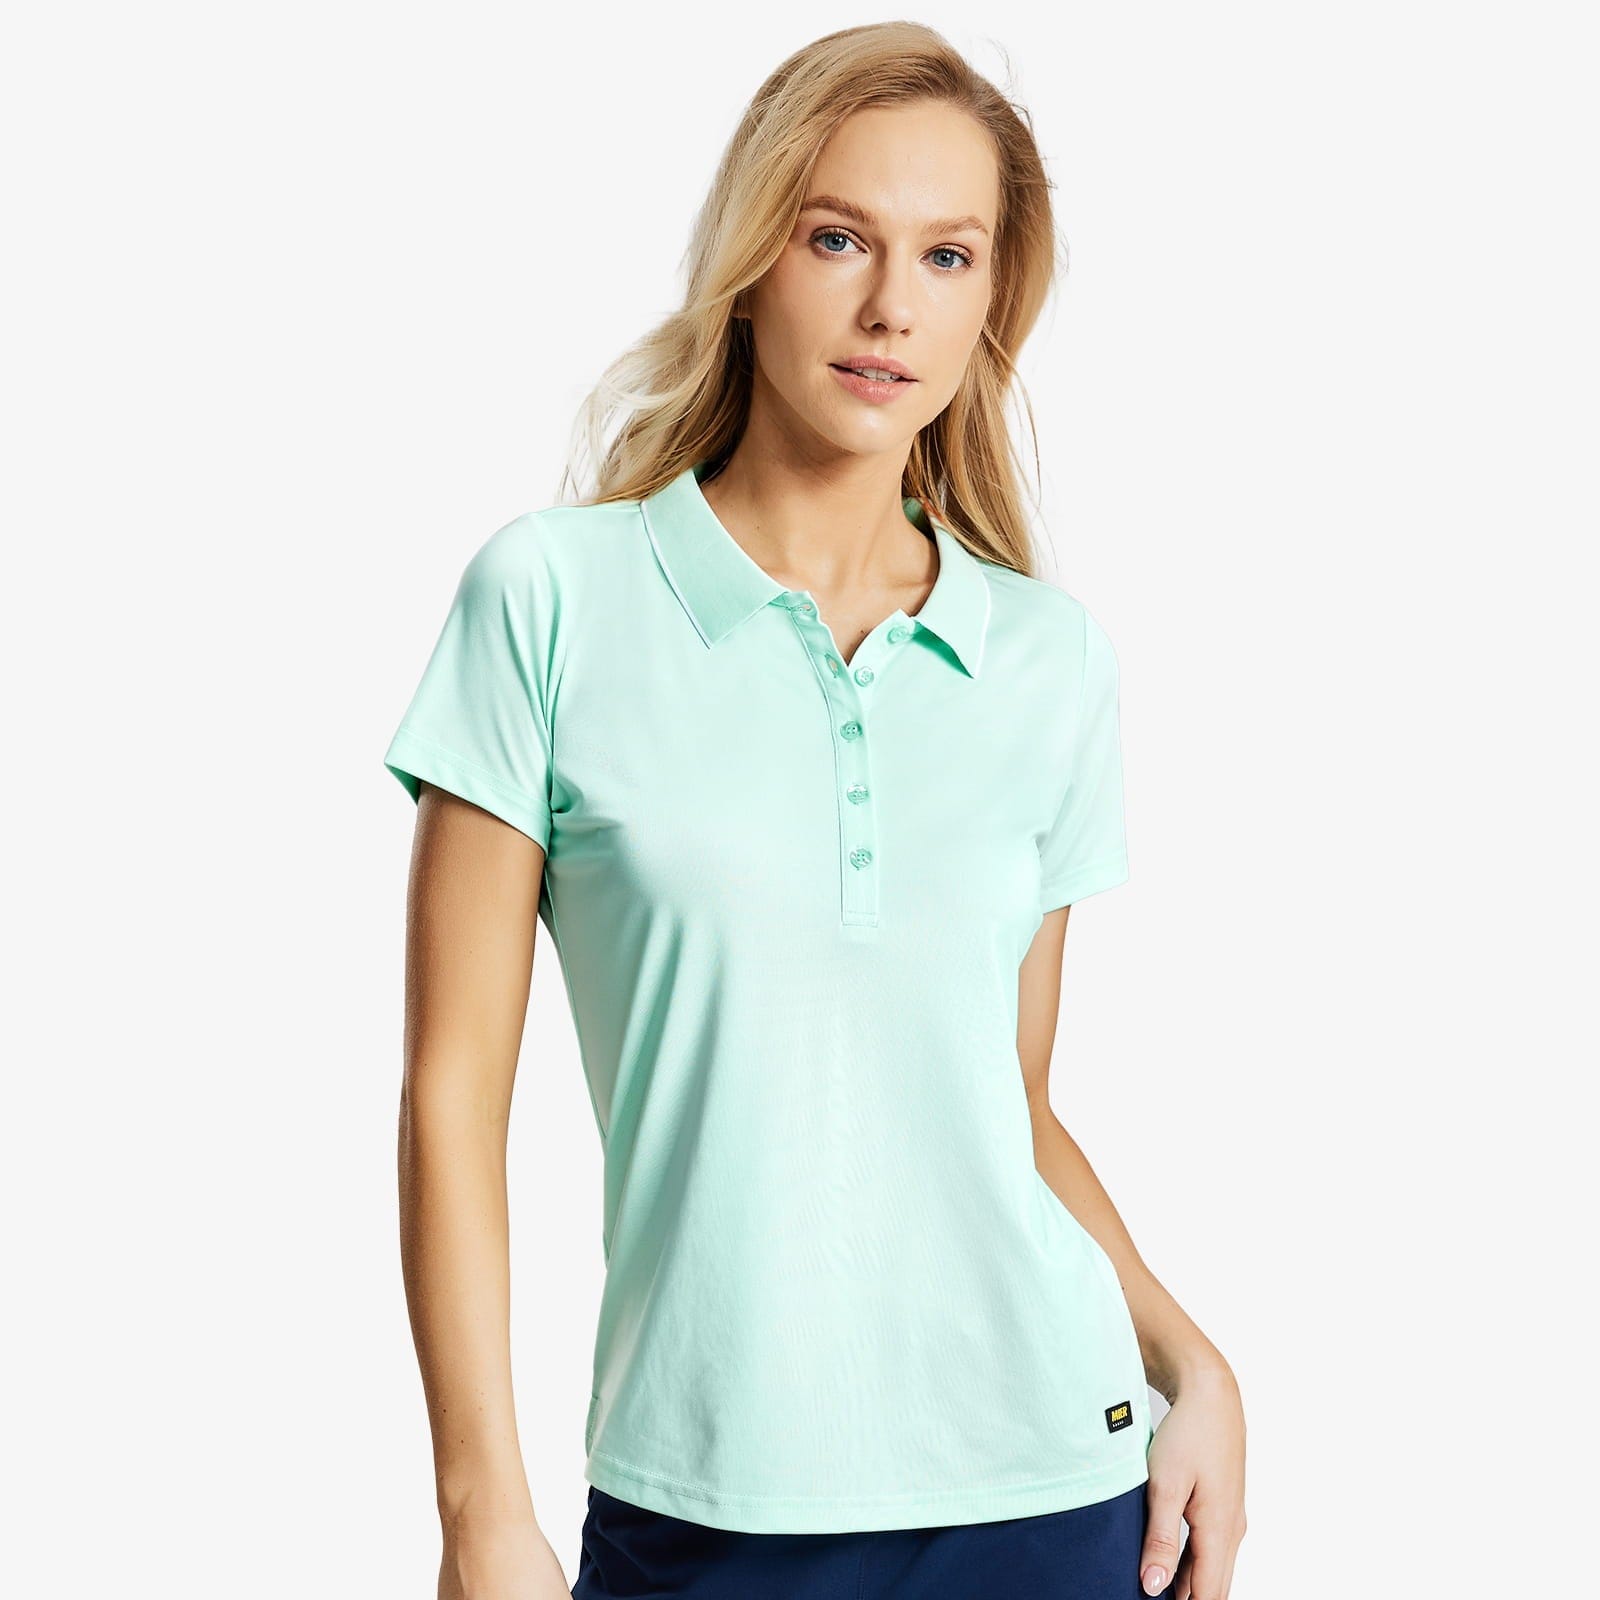 Women's Polo Shirts Moisture Wicking Collared Tshirts, Mint Green / M